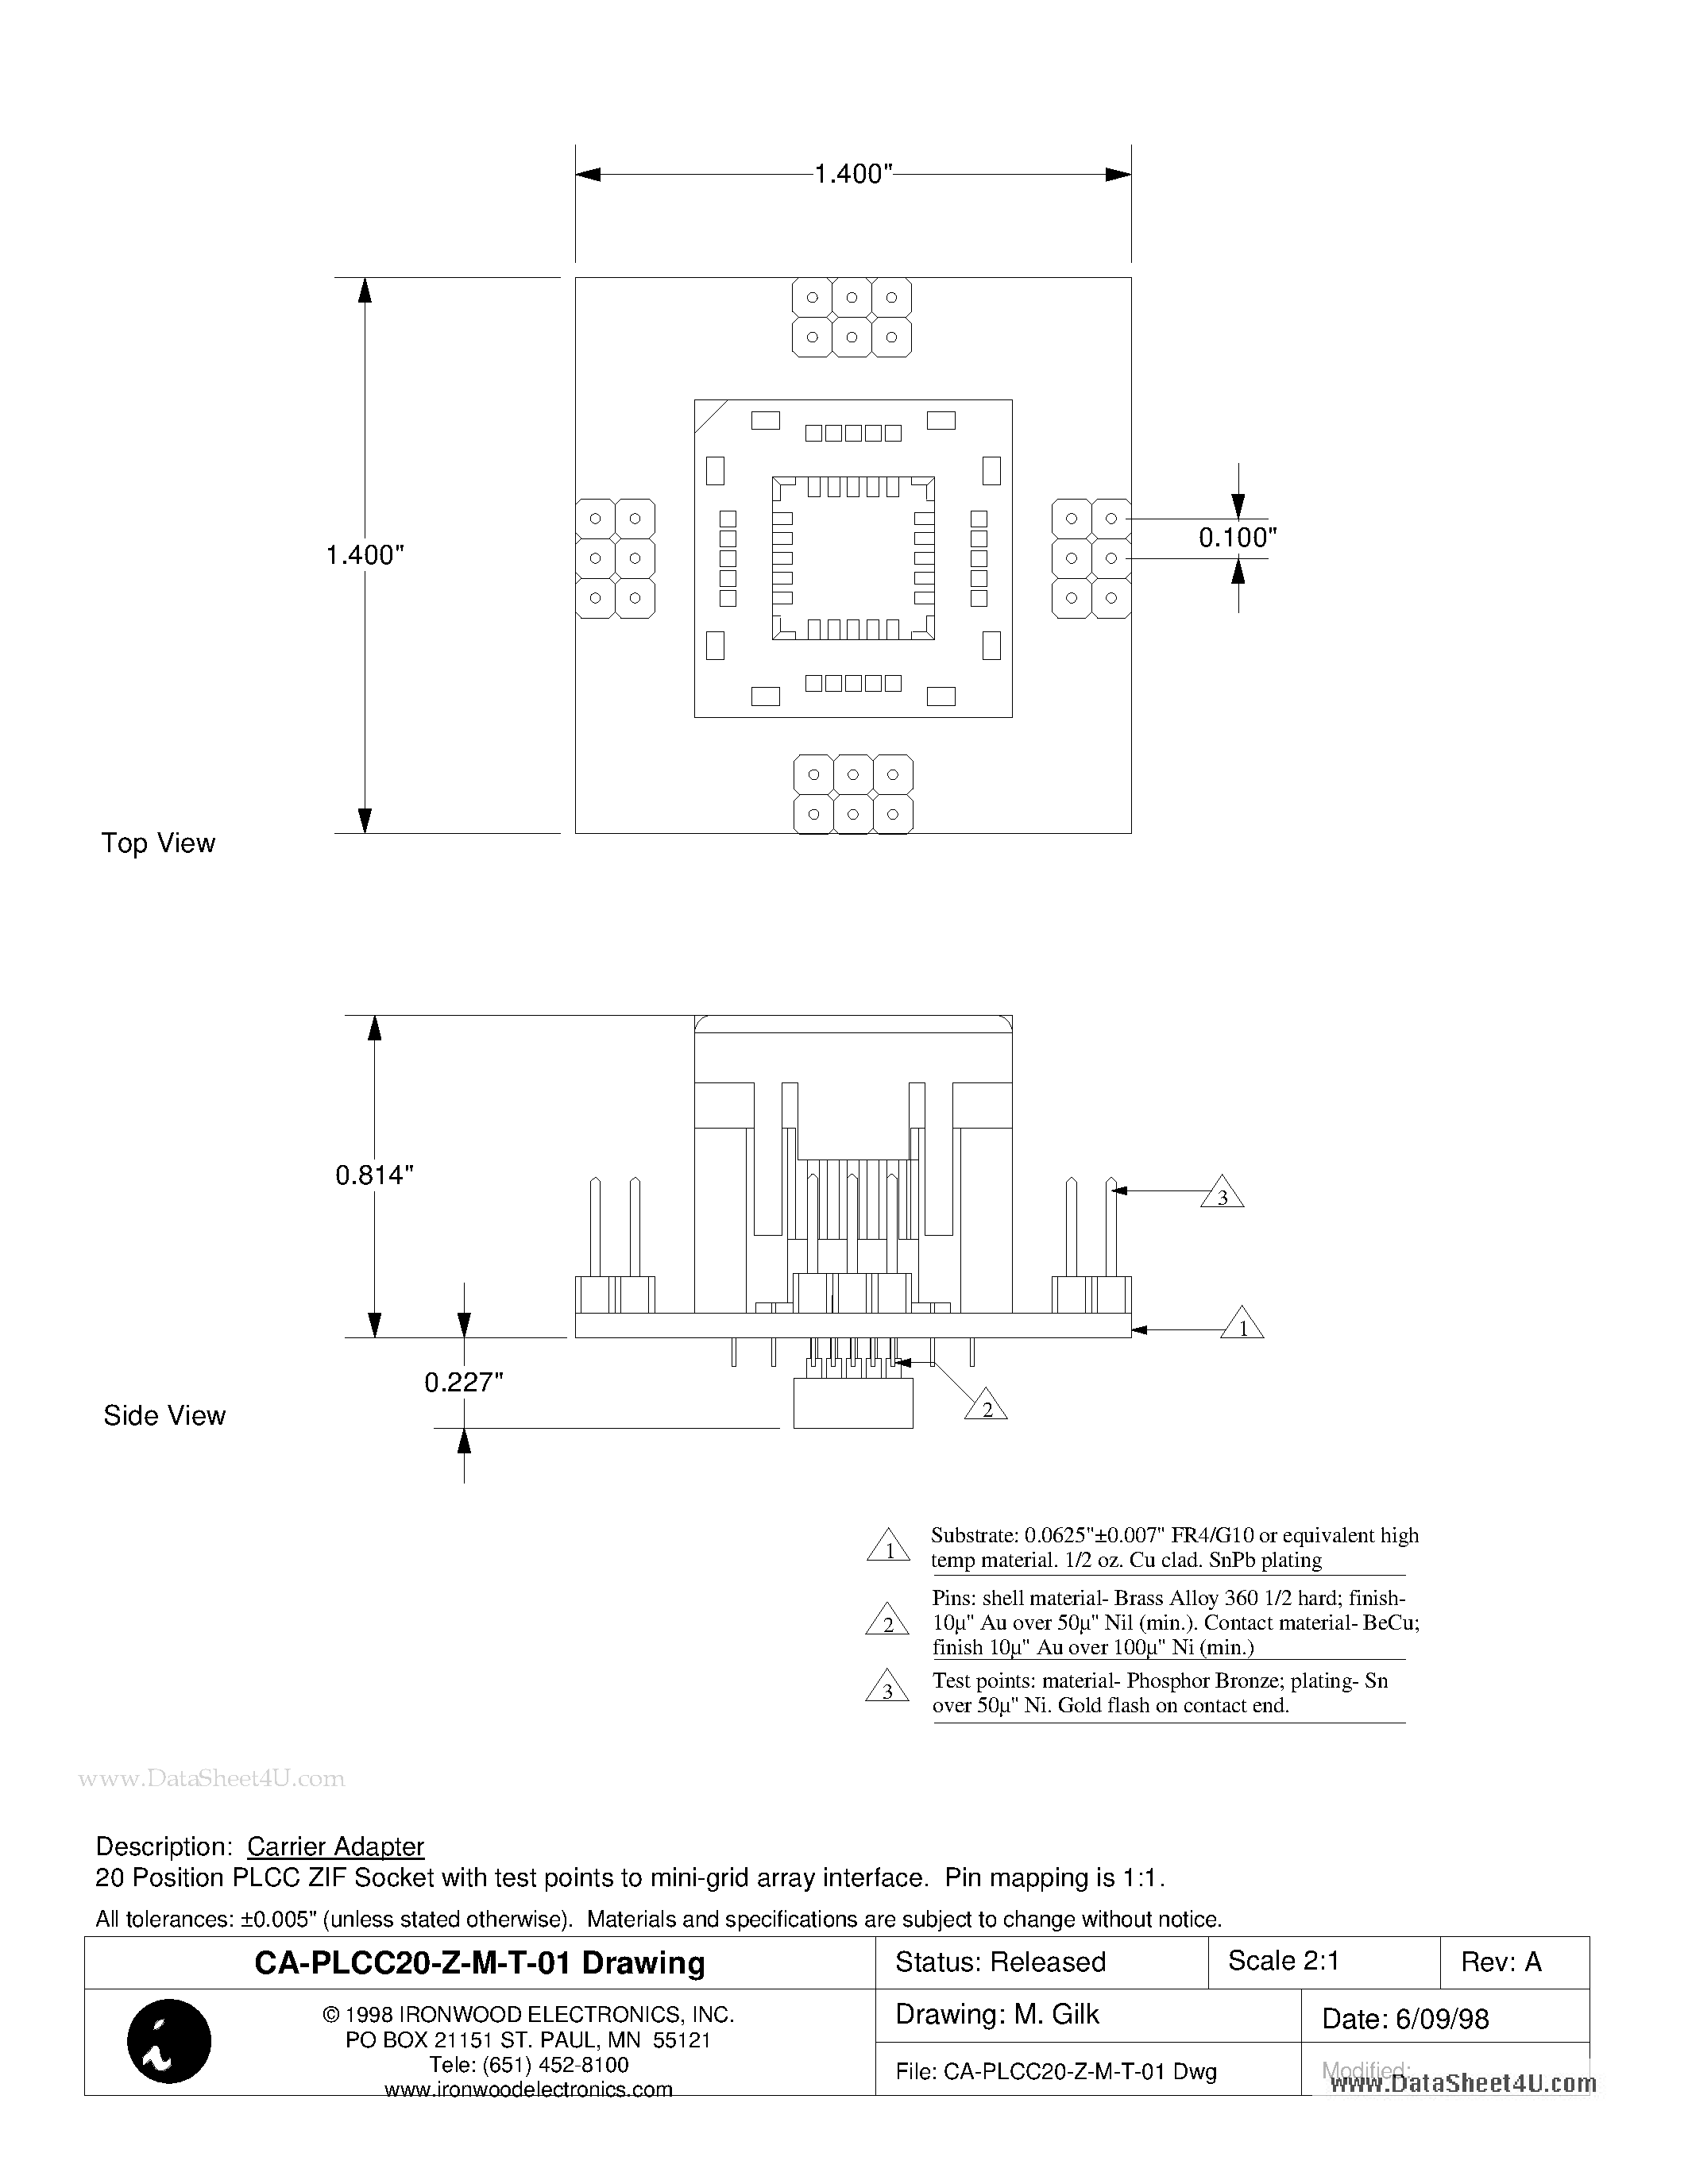 Datasheet CA-PLCC20-Z-M-T-01 - PLCC Carrier Adaptor page 1